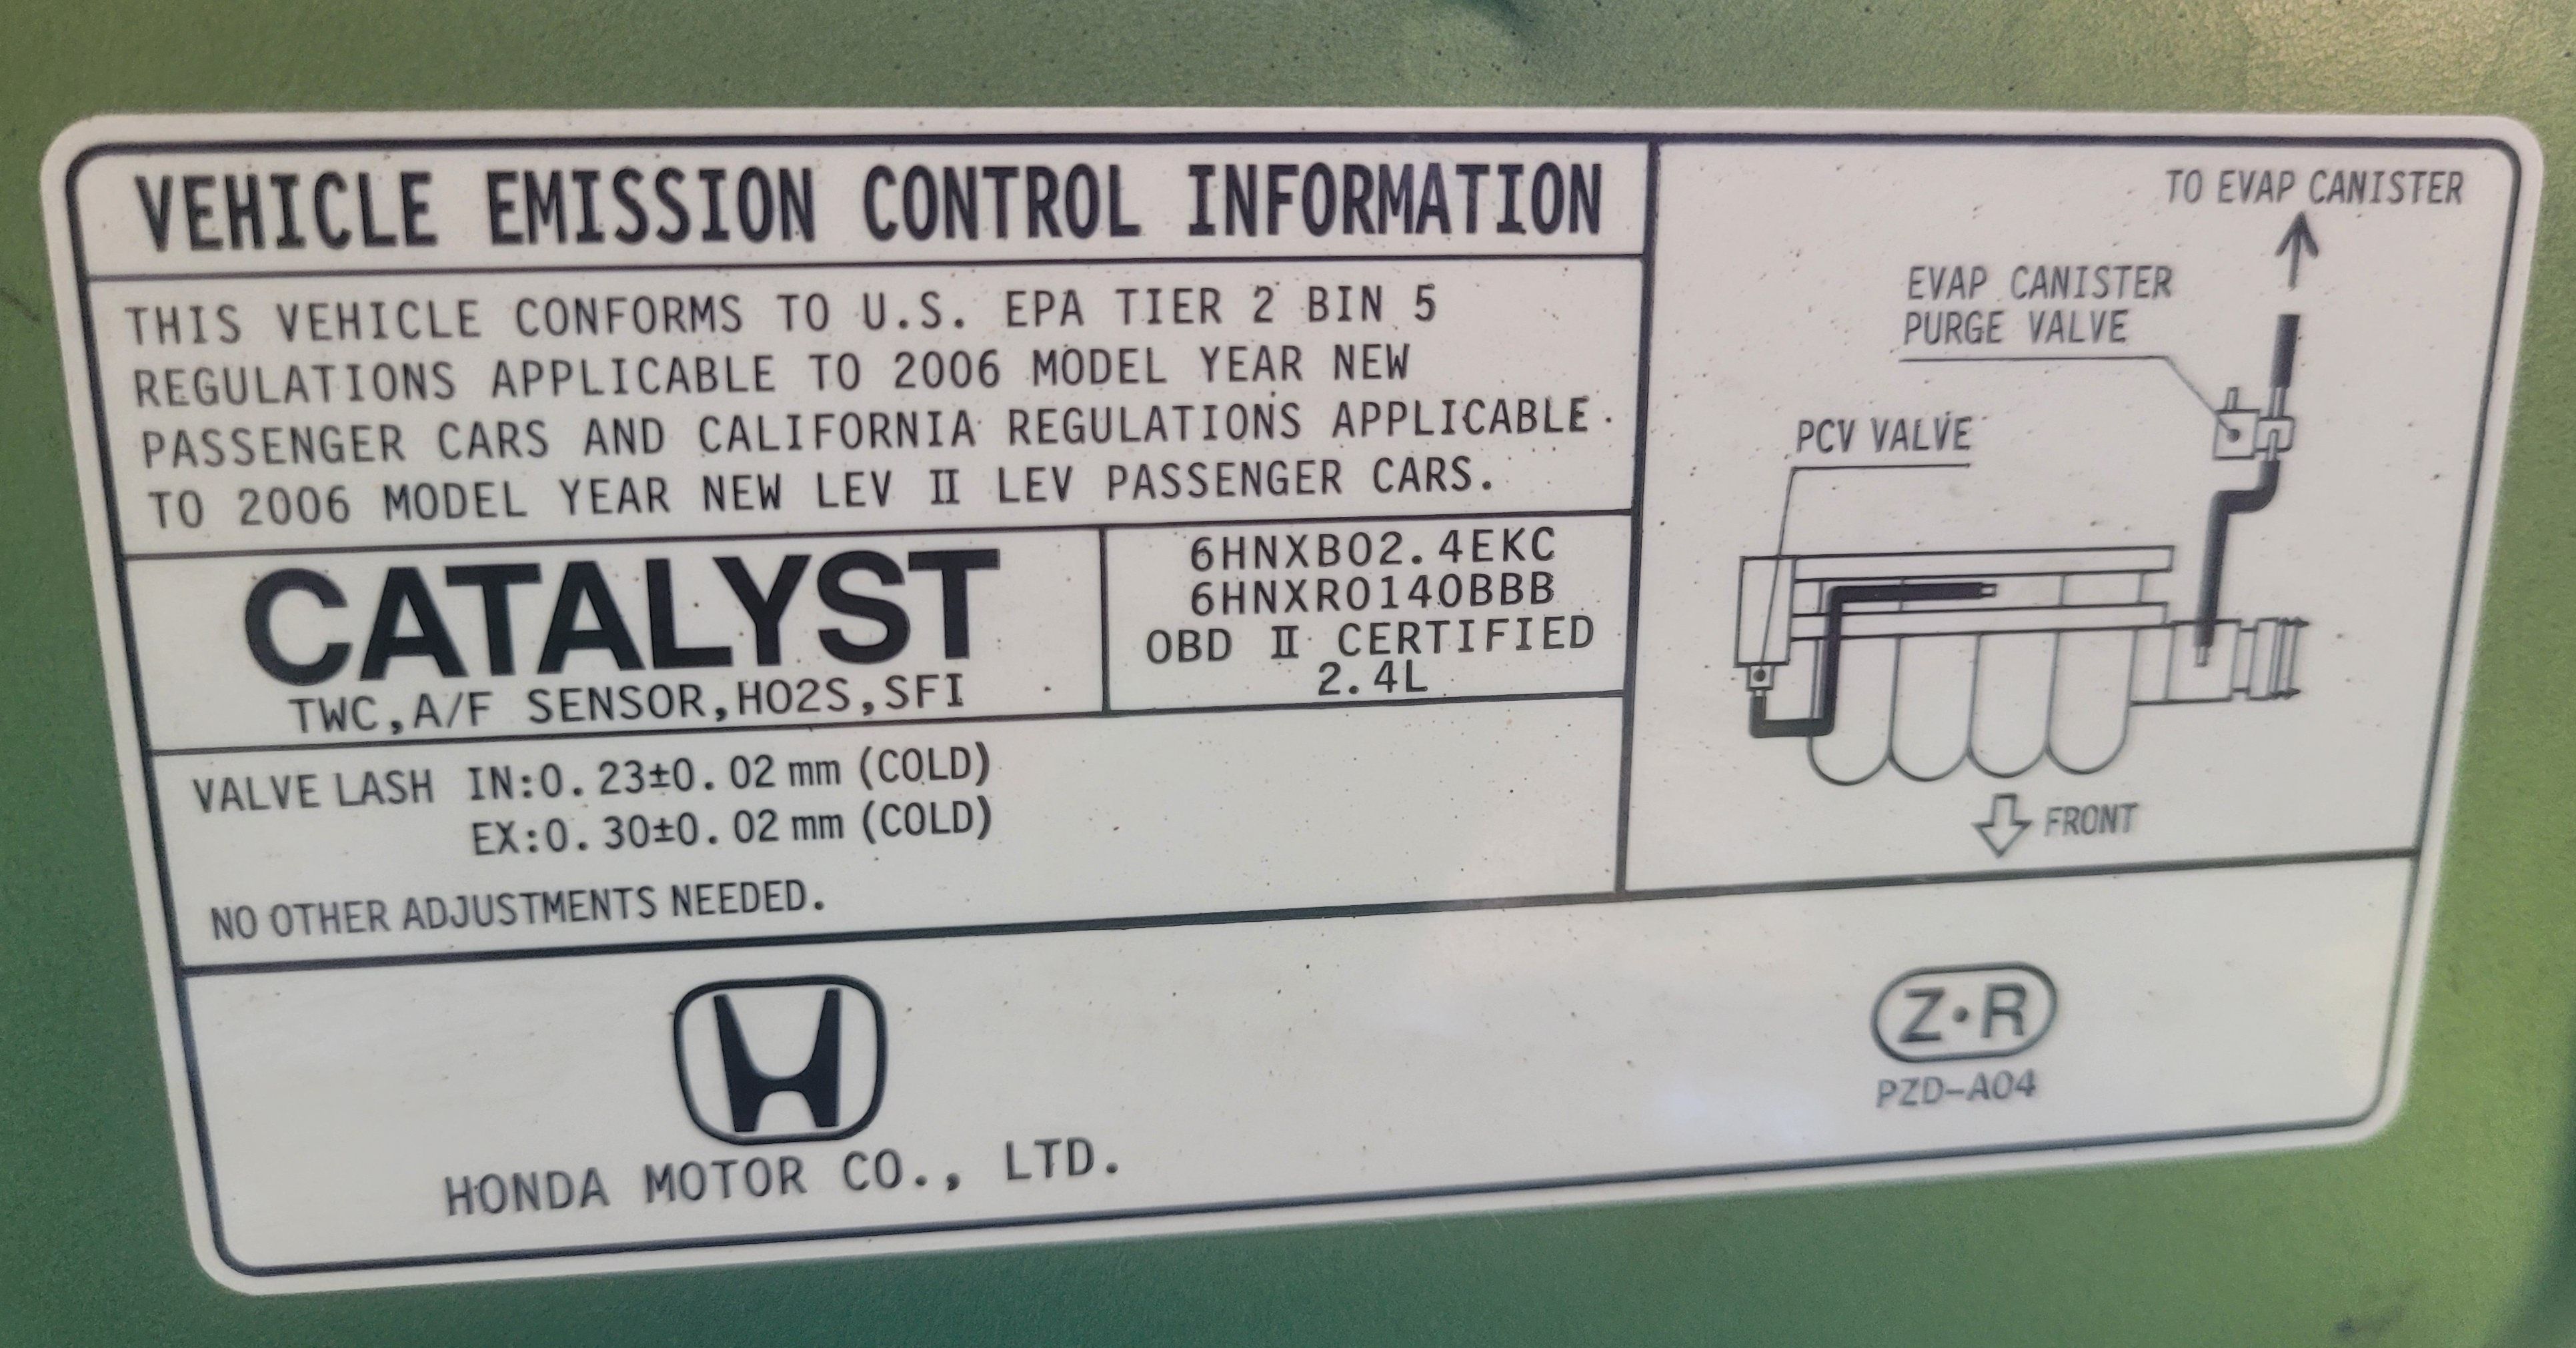 A Vehicle Emission Control Information label for a Honda